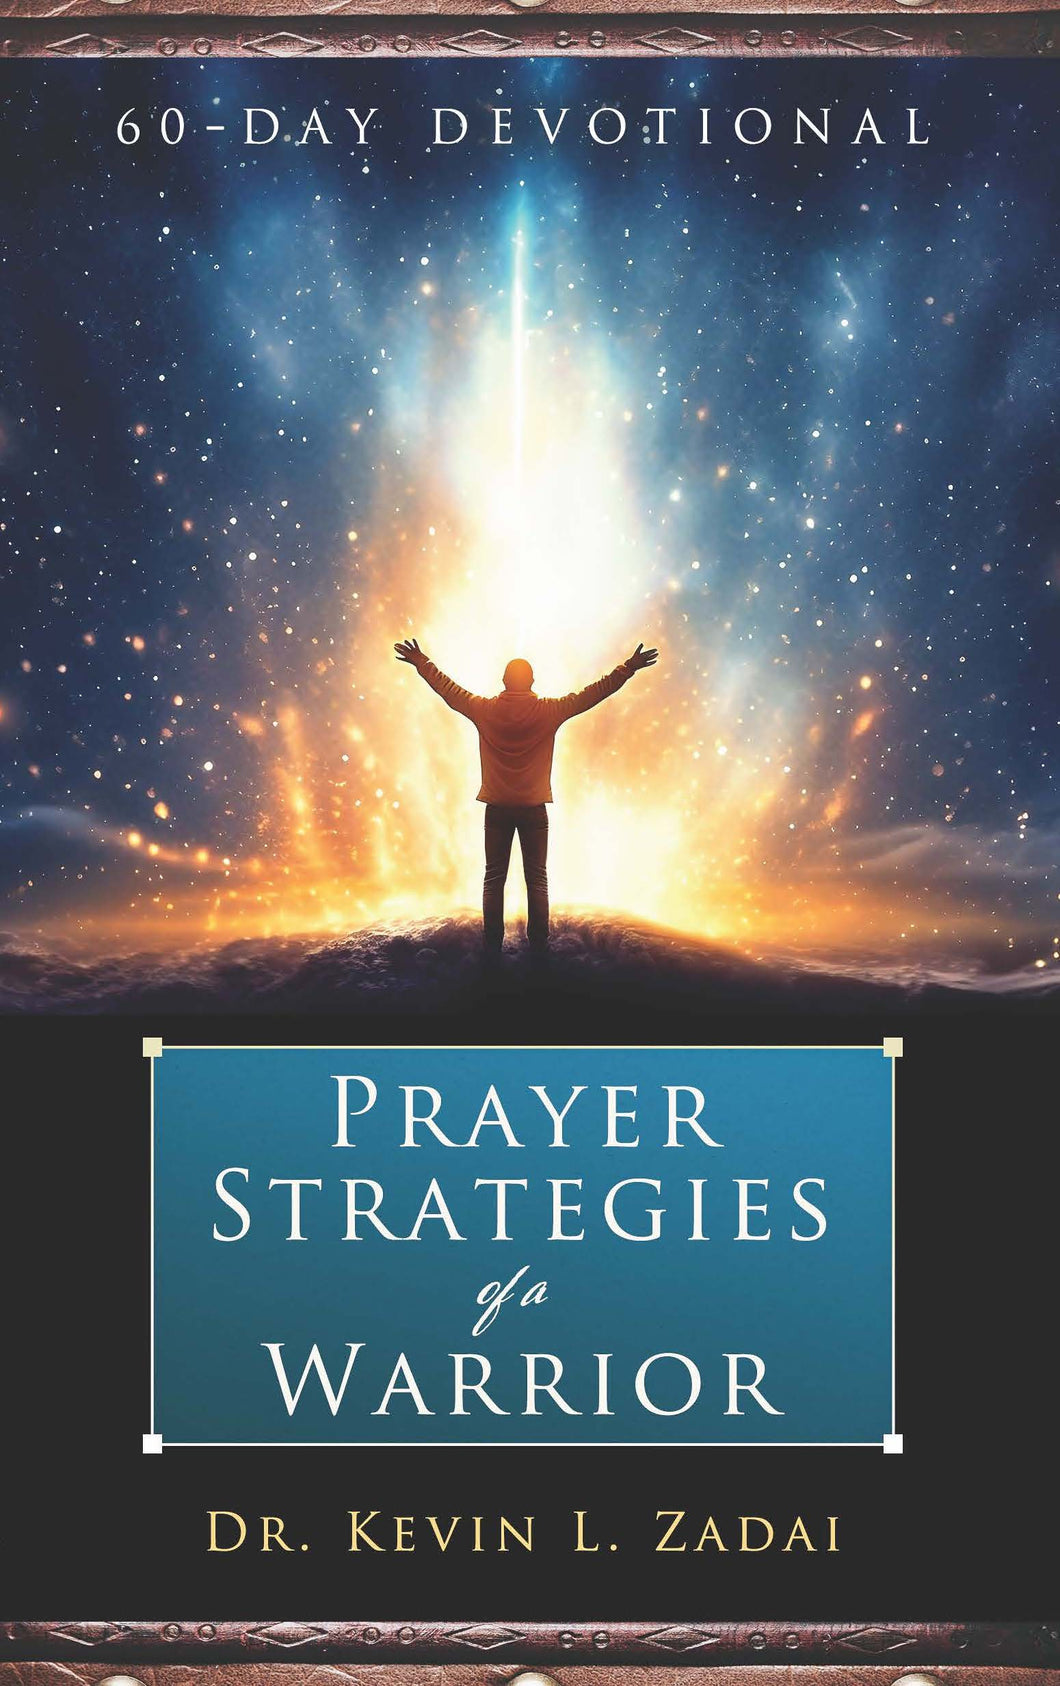 60 Day Devotional: Prayer Strategies Of A Warrior